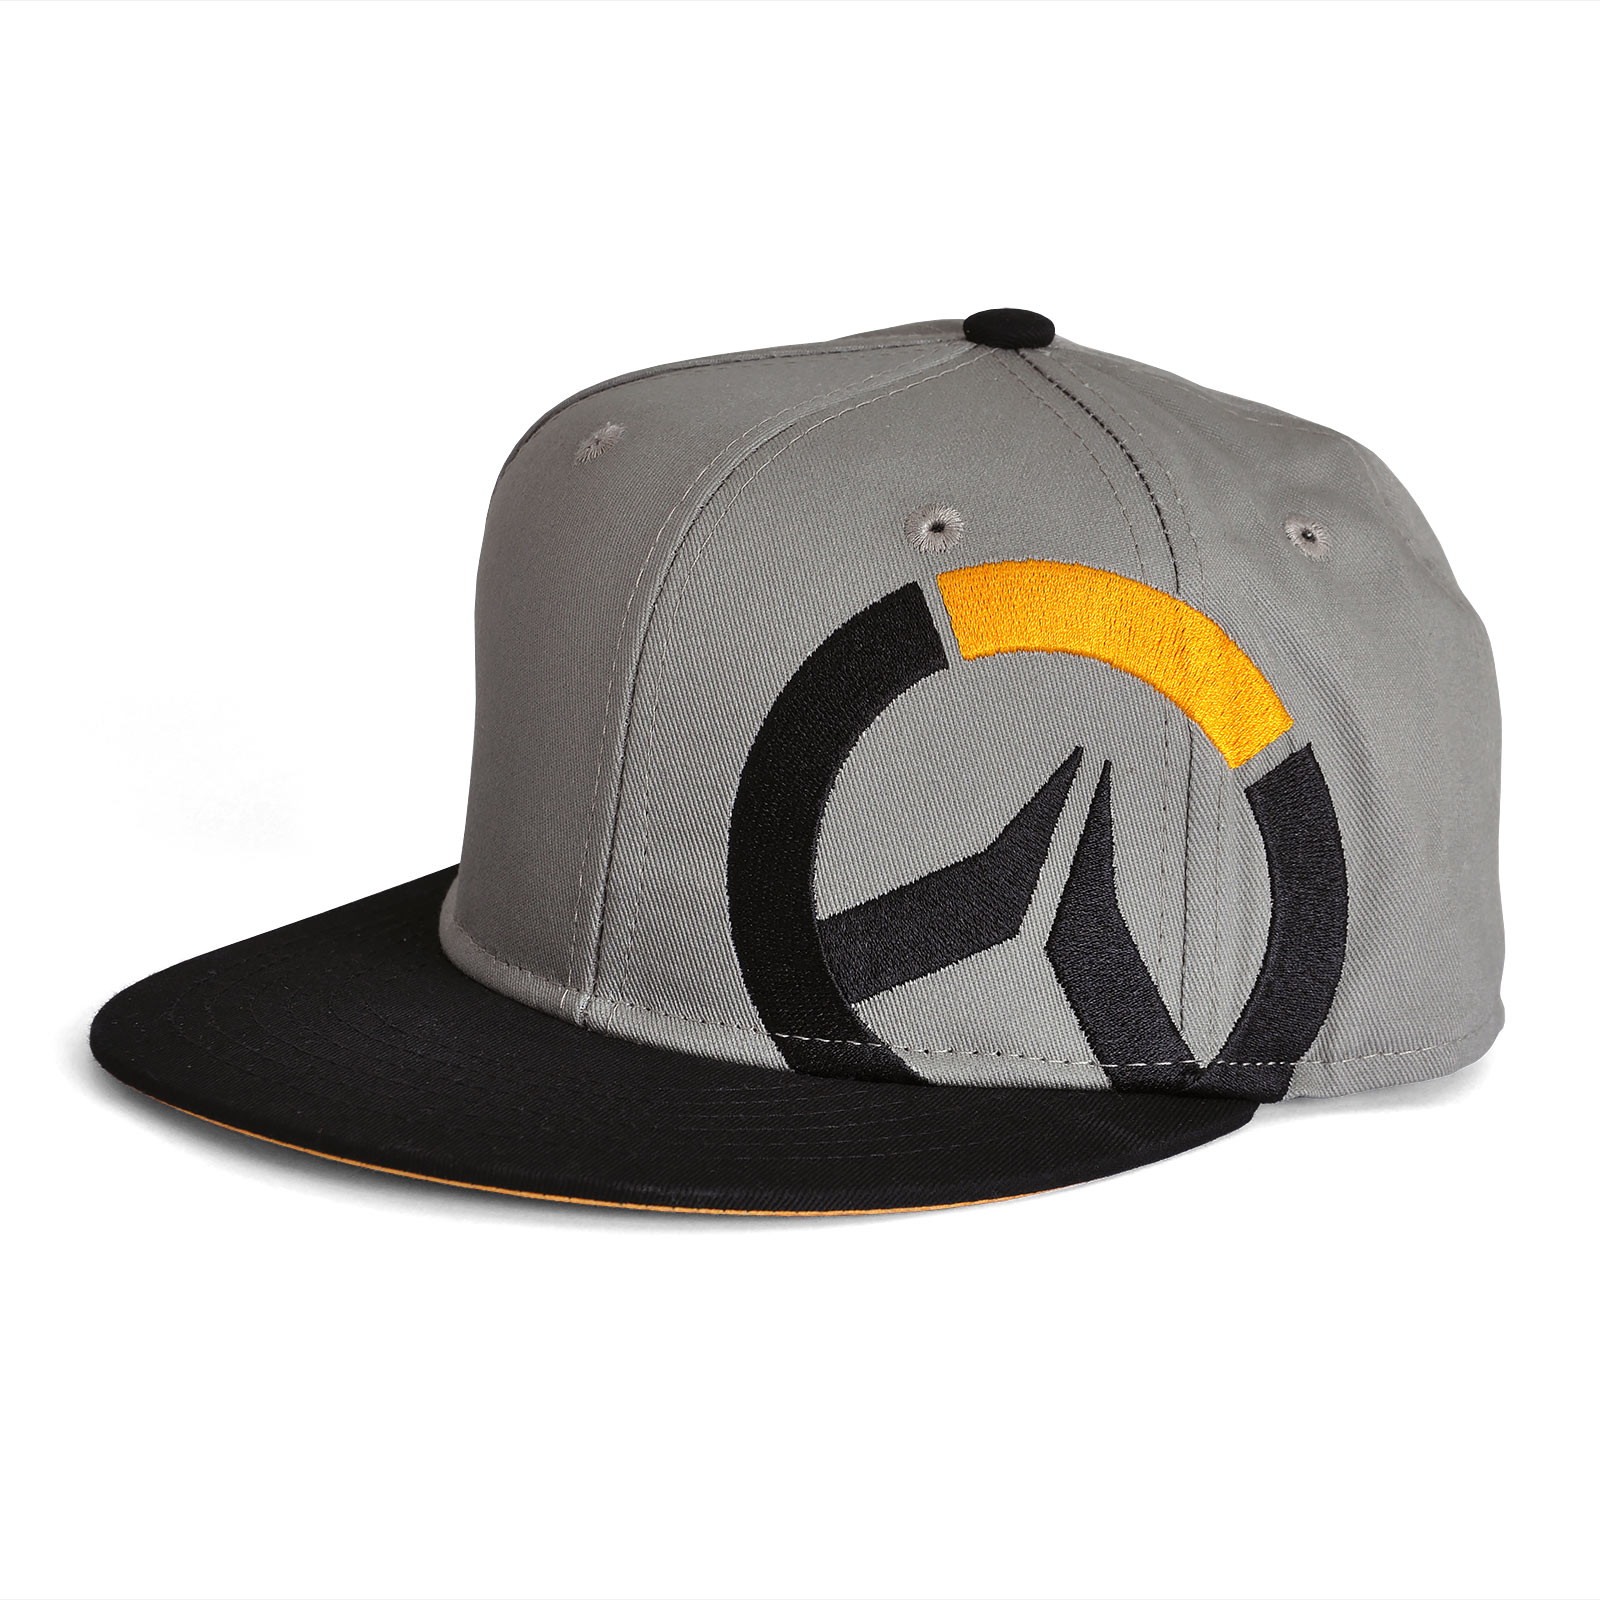 Overwatch - Casquette Snapback Logo gris